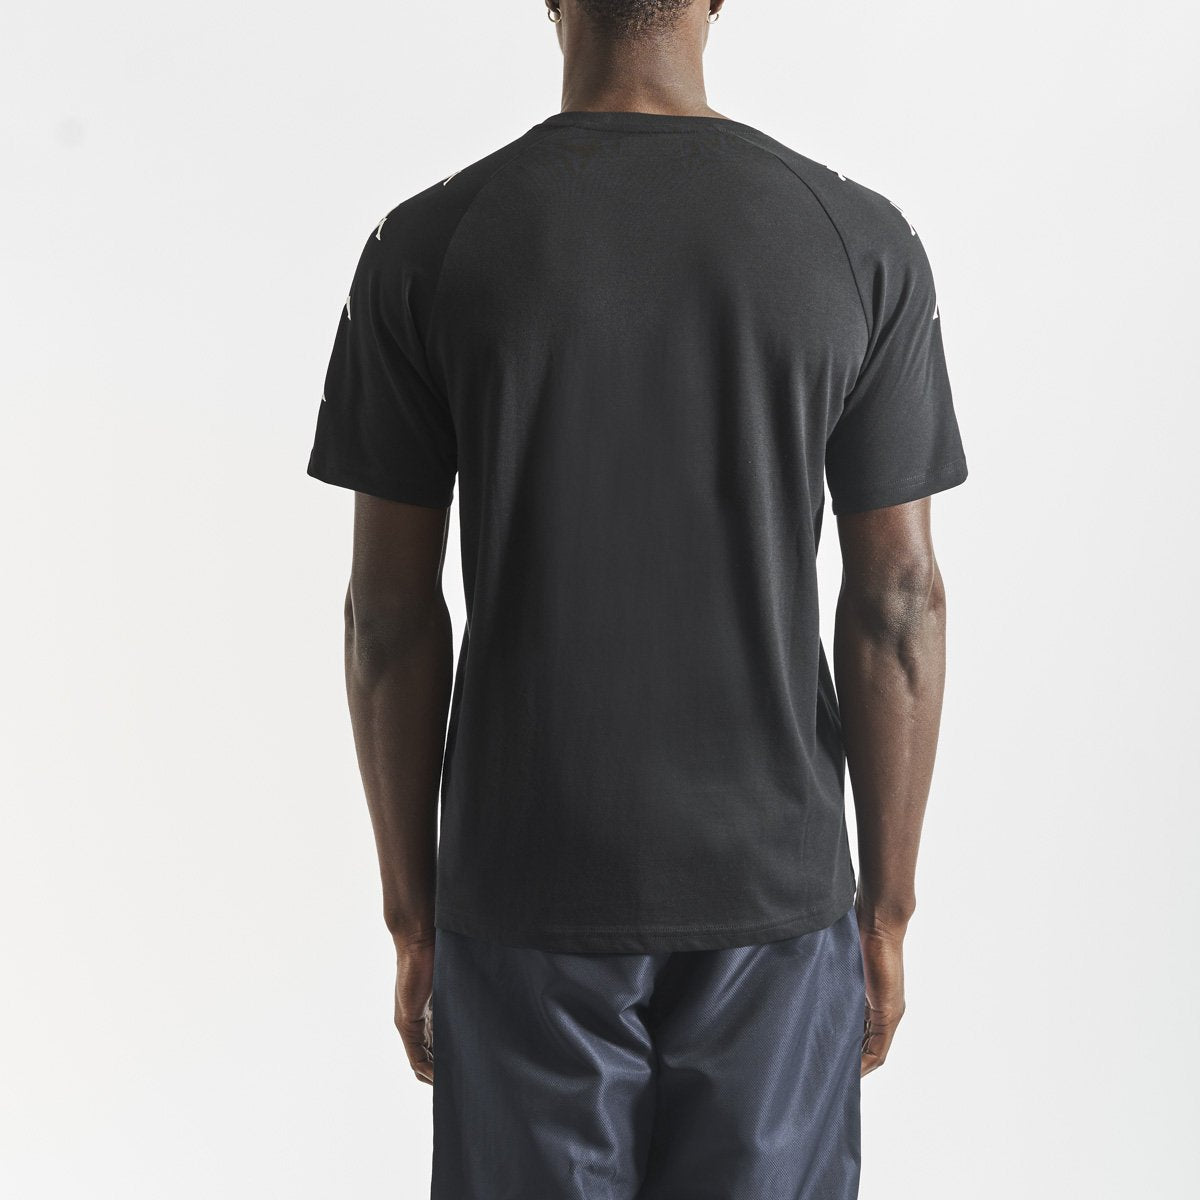 Camiseta Klake negro hombre - Imagen 3